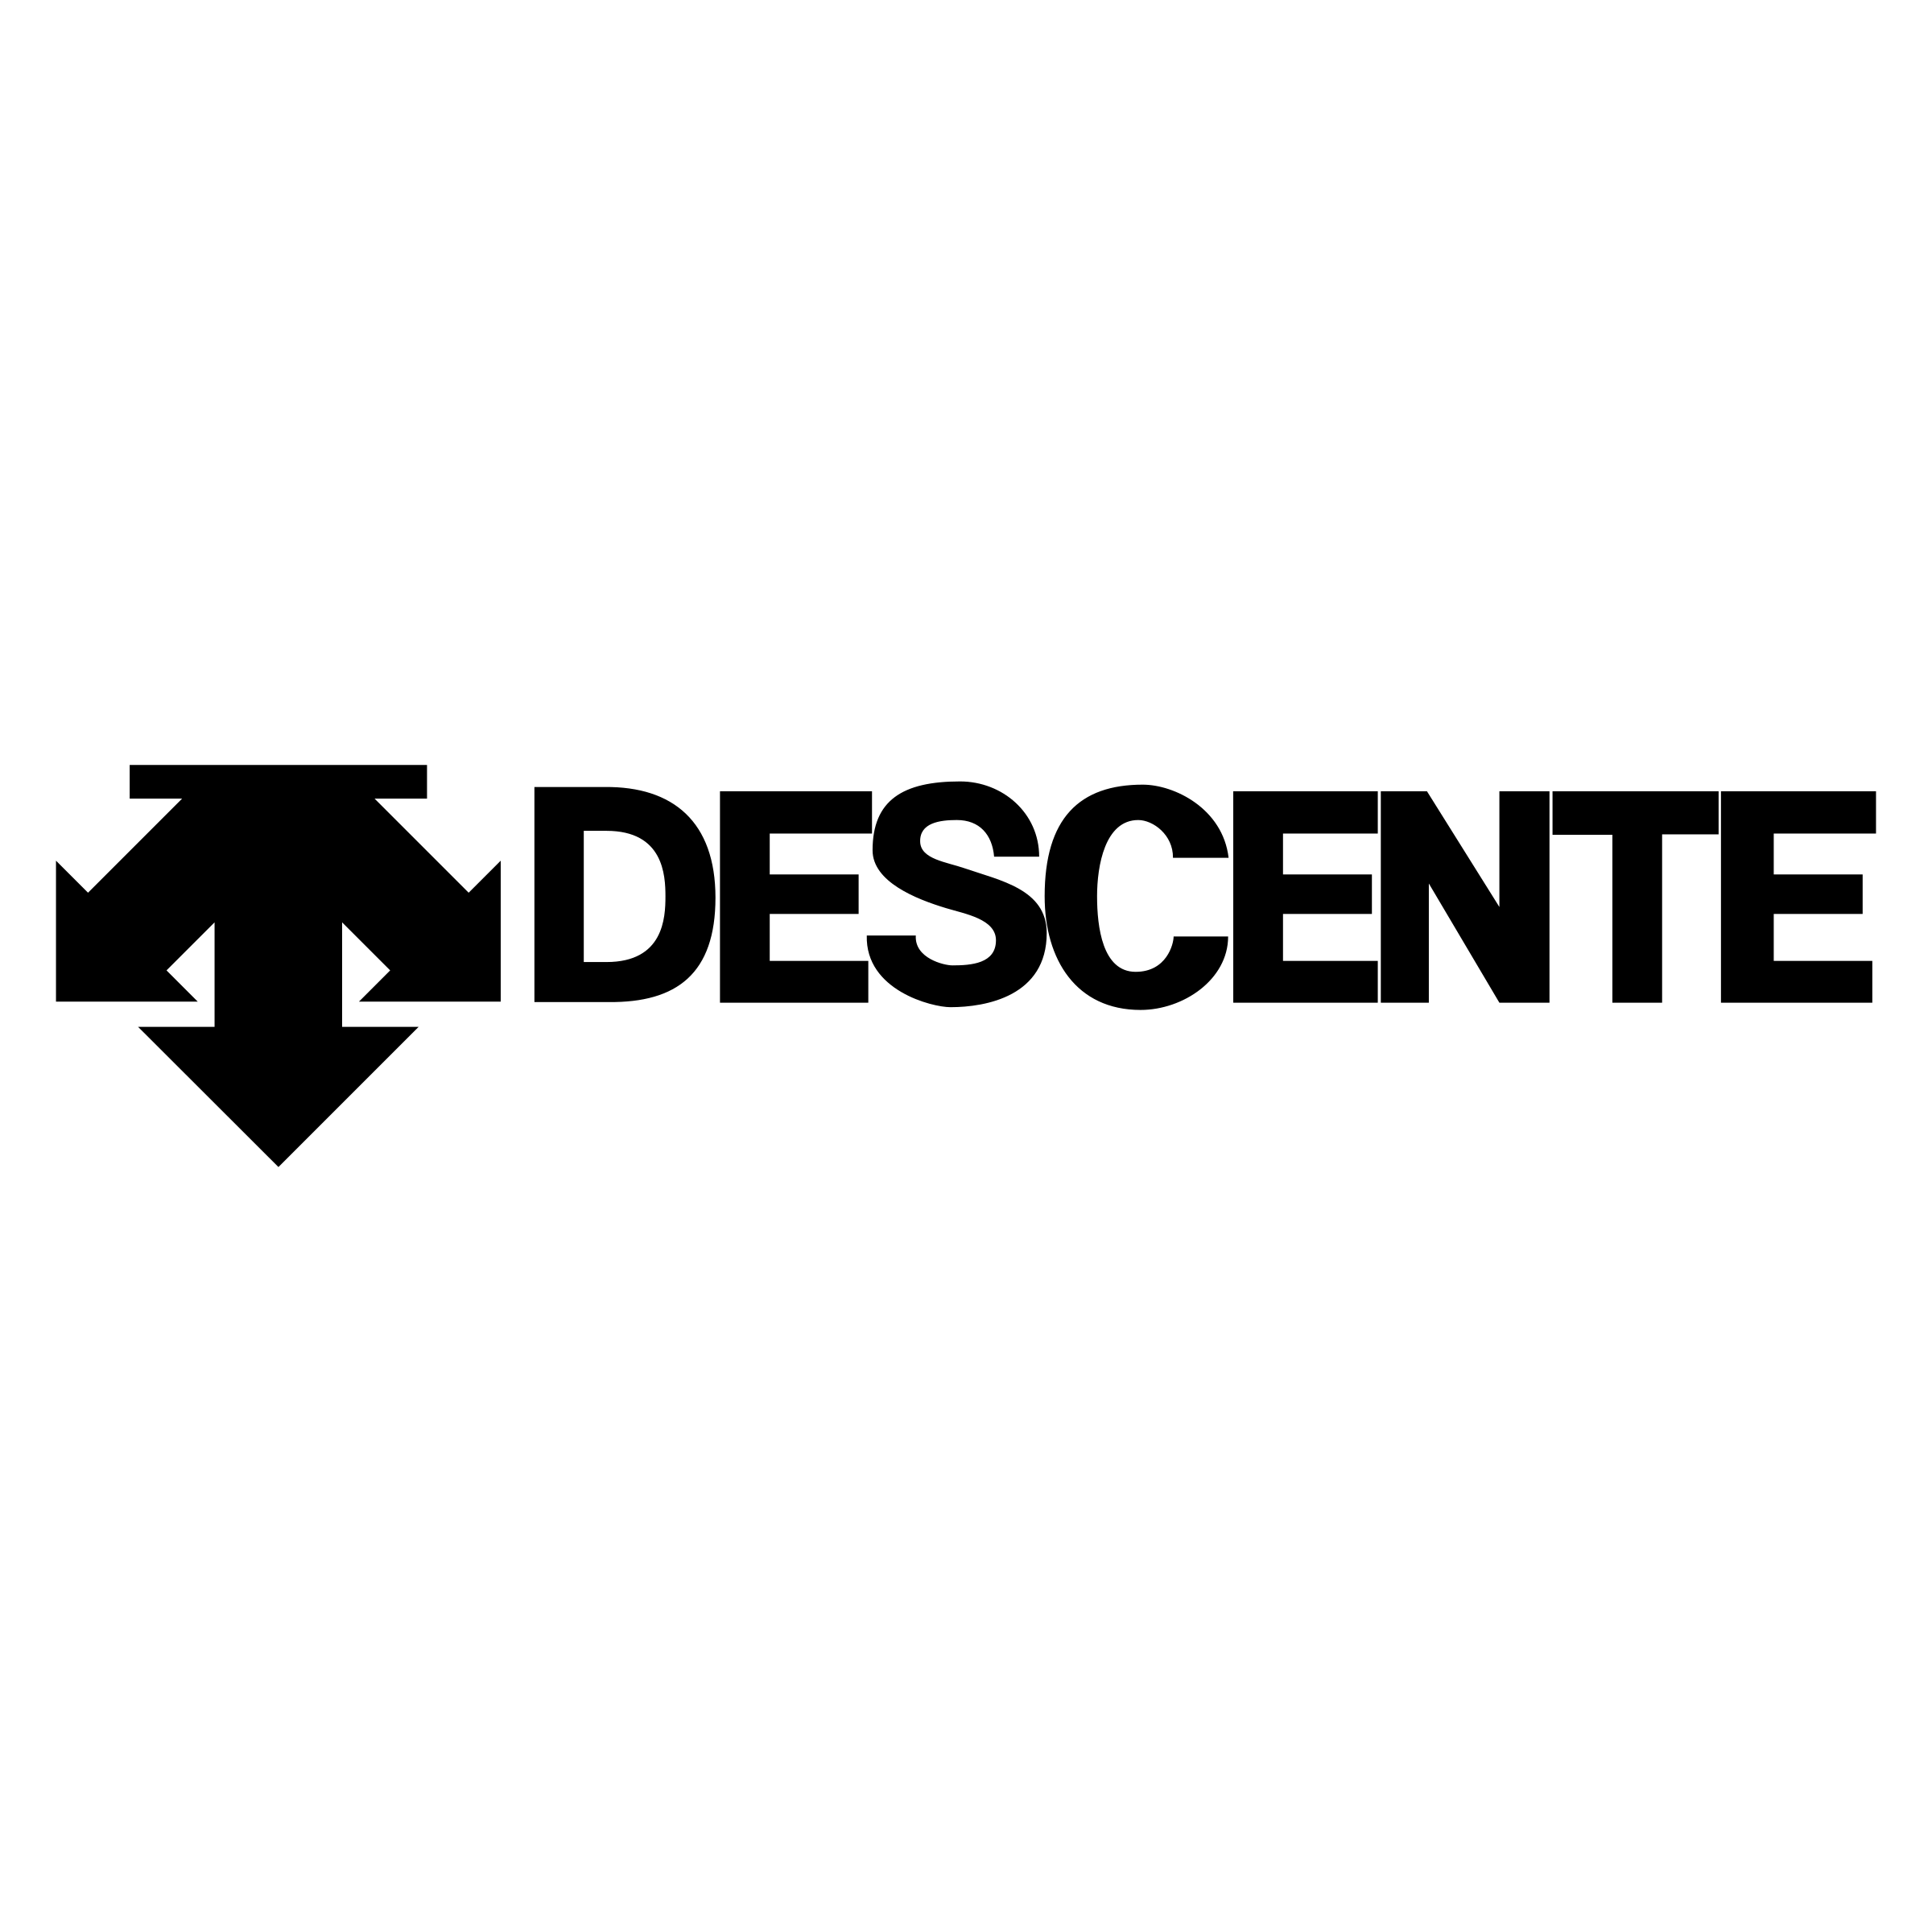 Descente Logo - Descente Logo PNG Transparent & SVG Vector - Freebie Supply